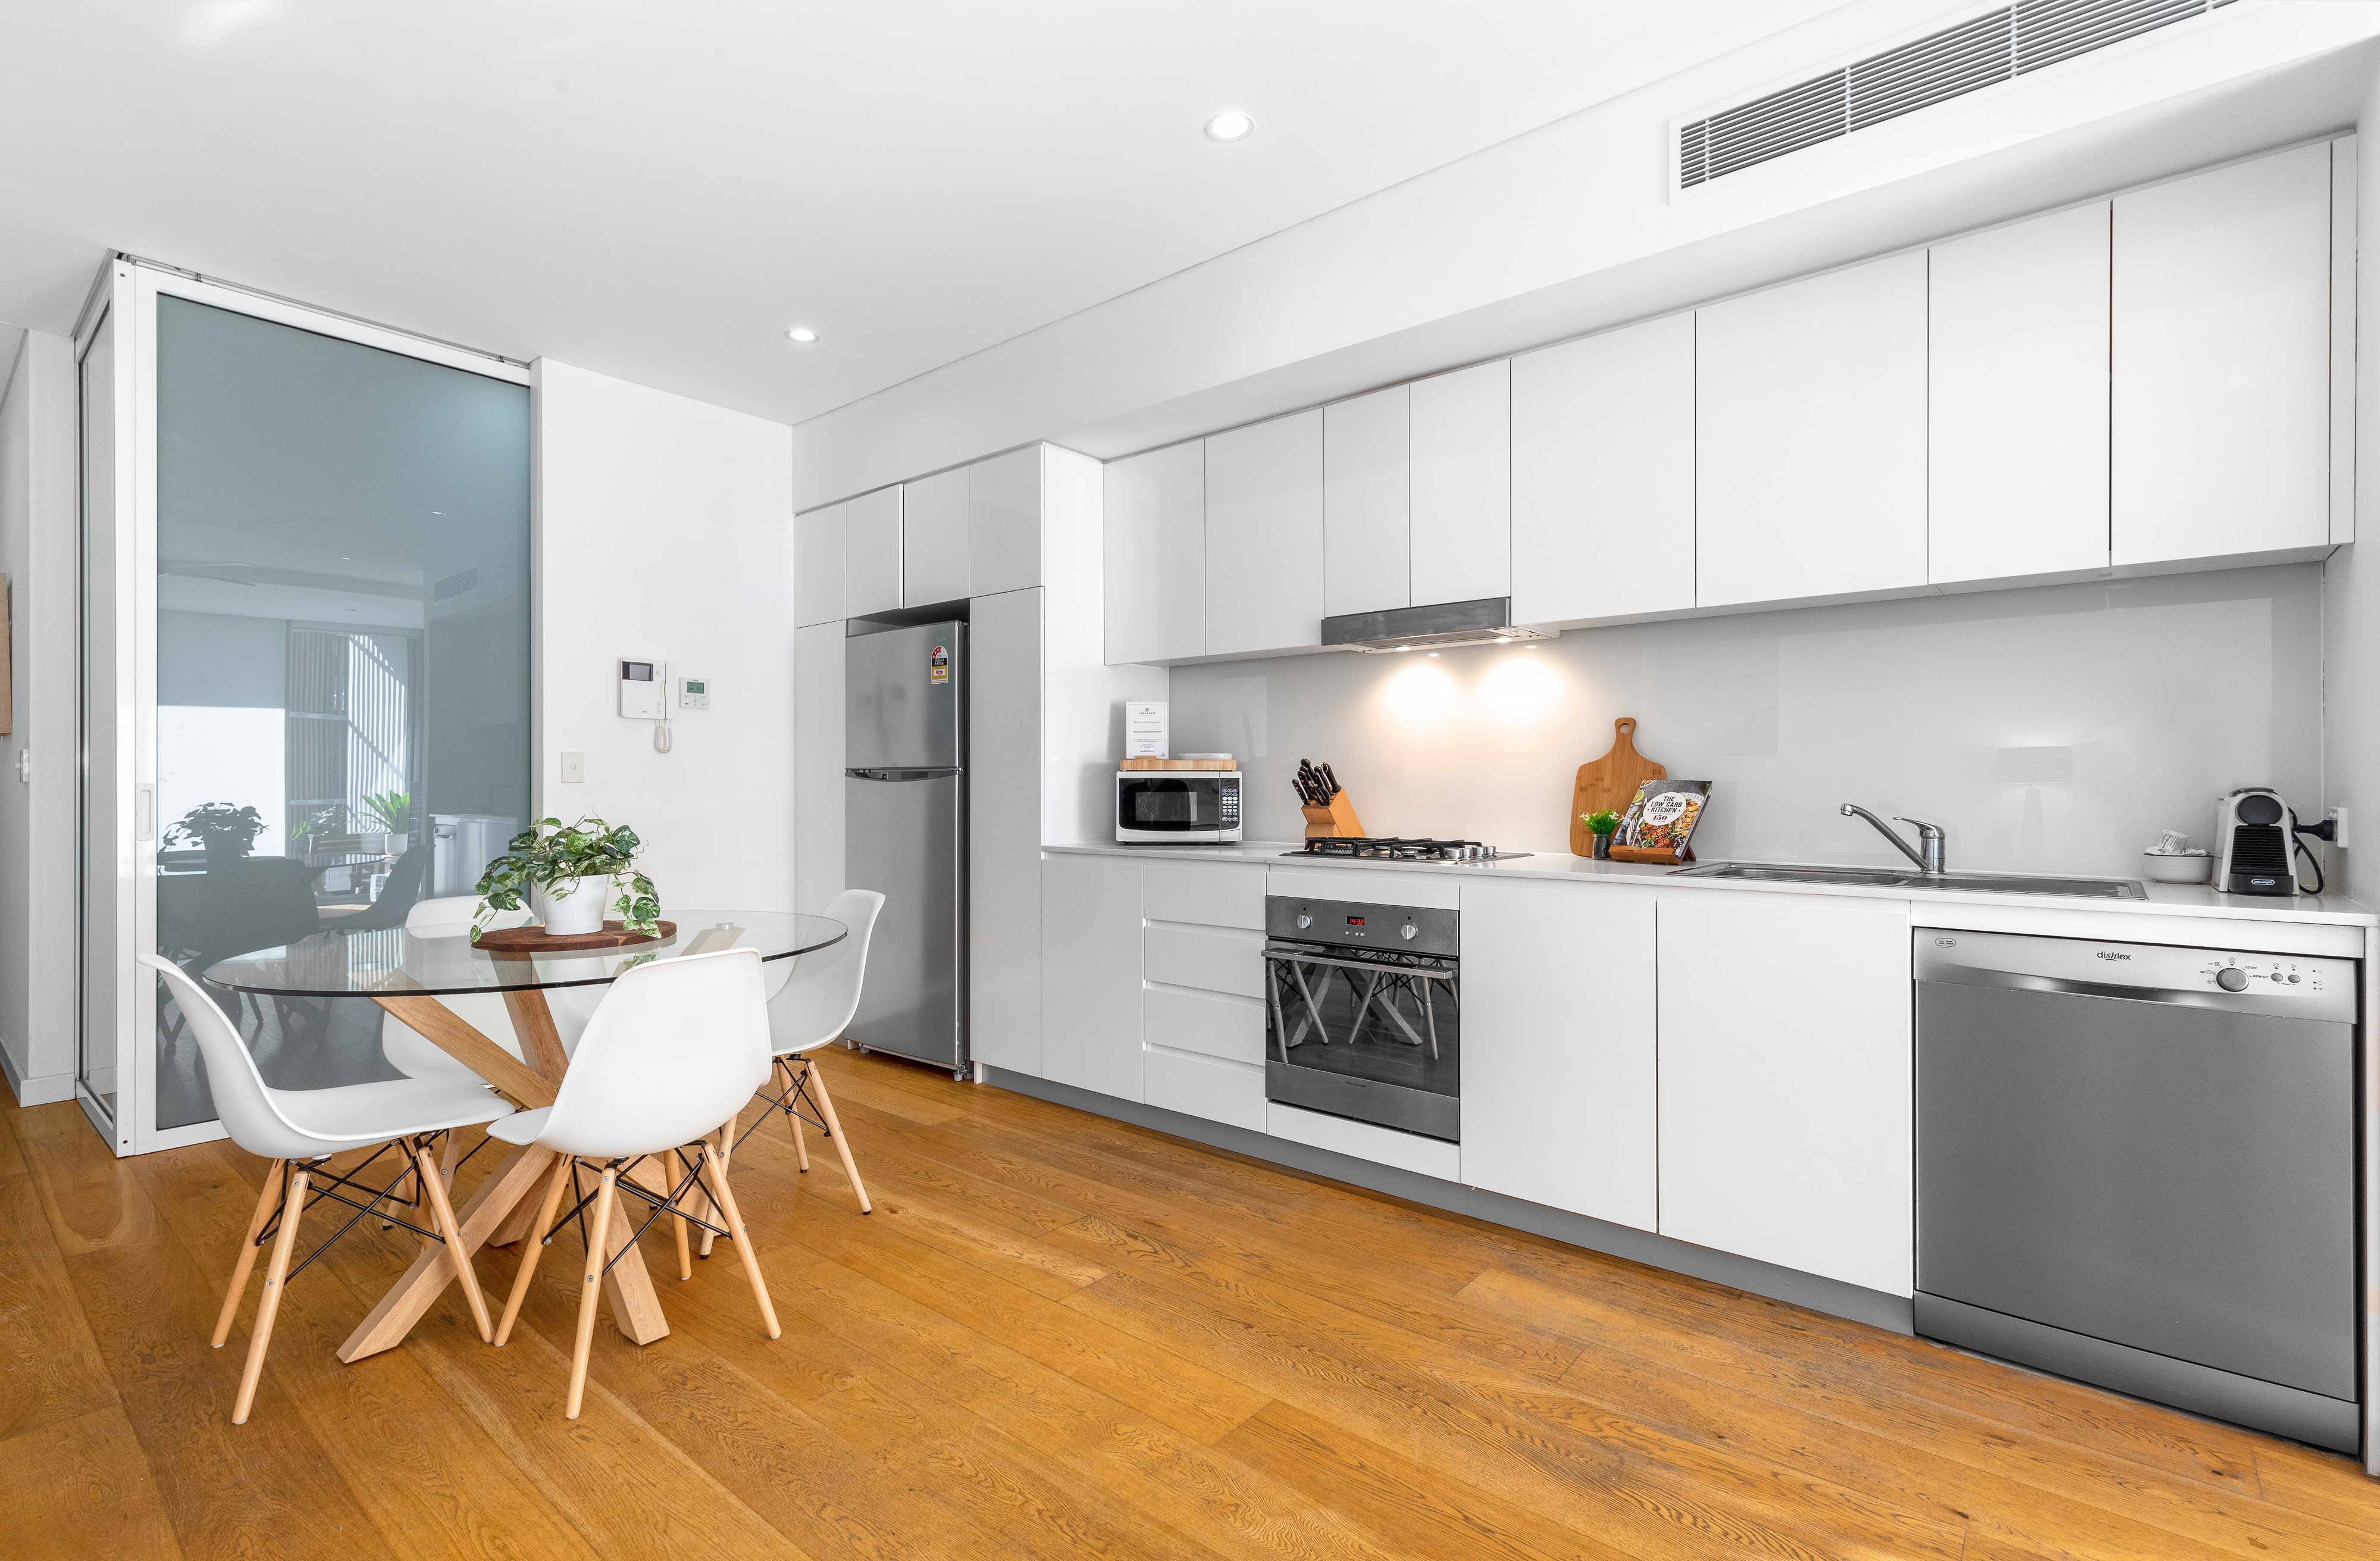 Kitchen - One Bedroom Apartment - Urban Rest - Waterloo St Apartments - Sydney